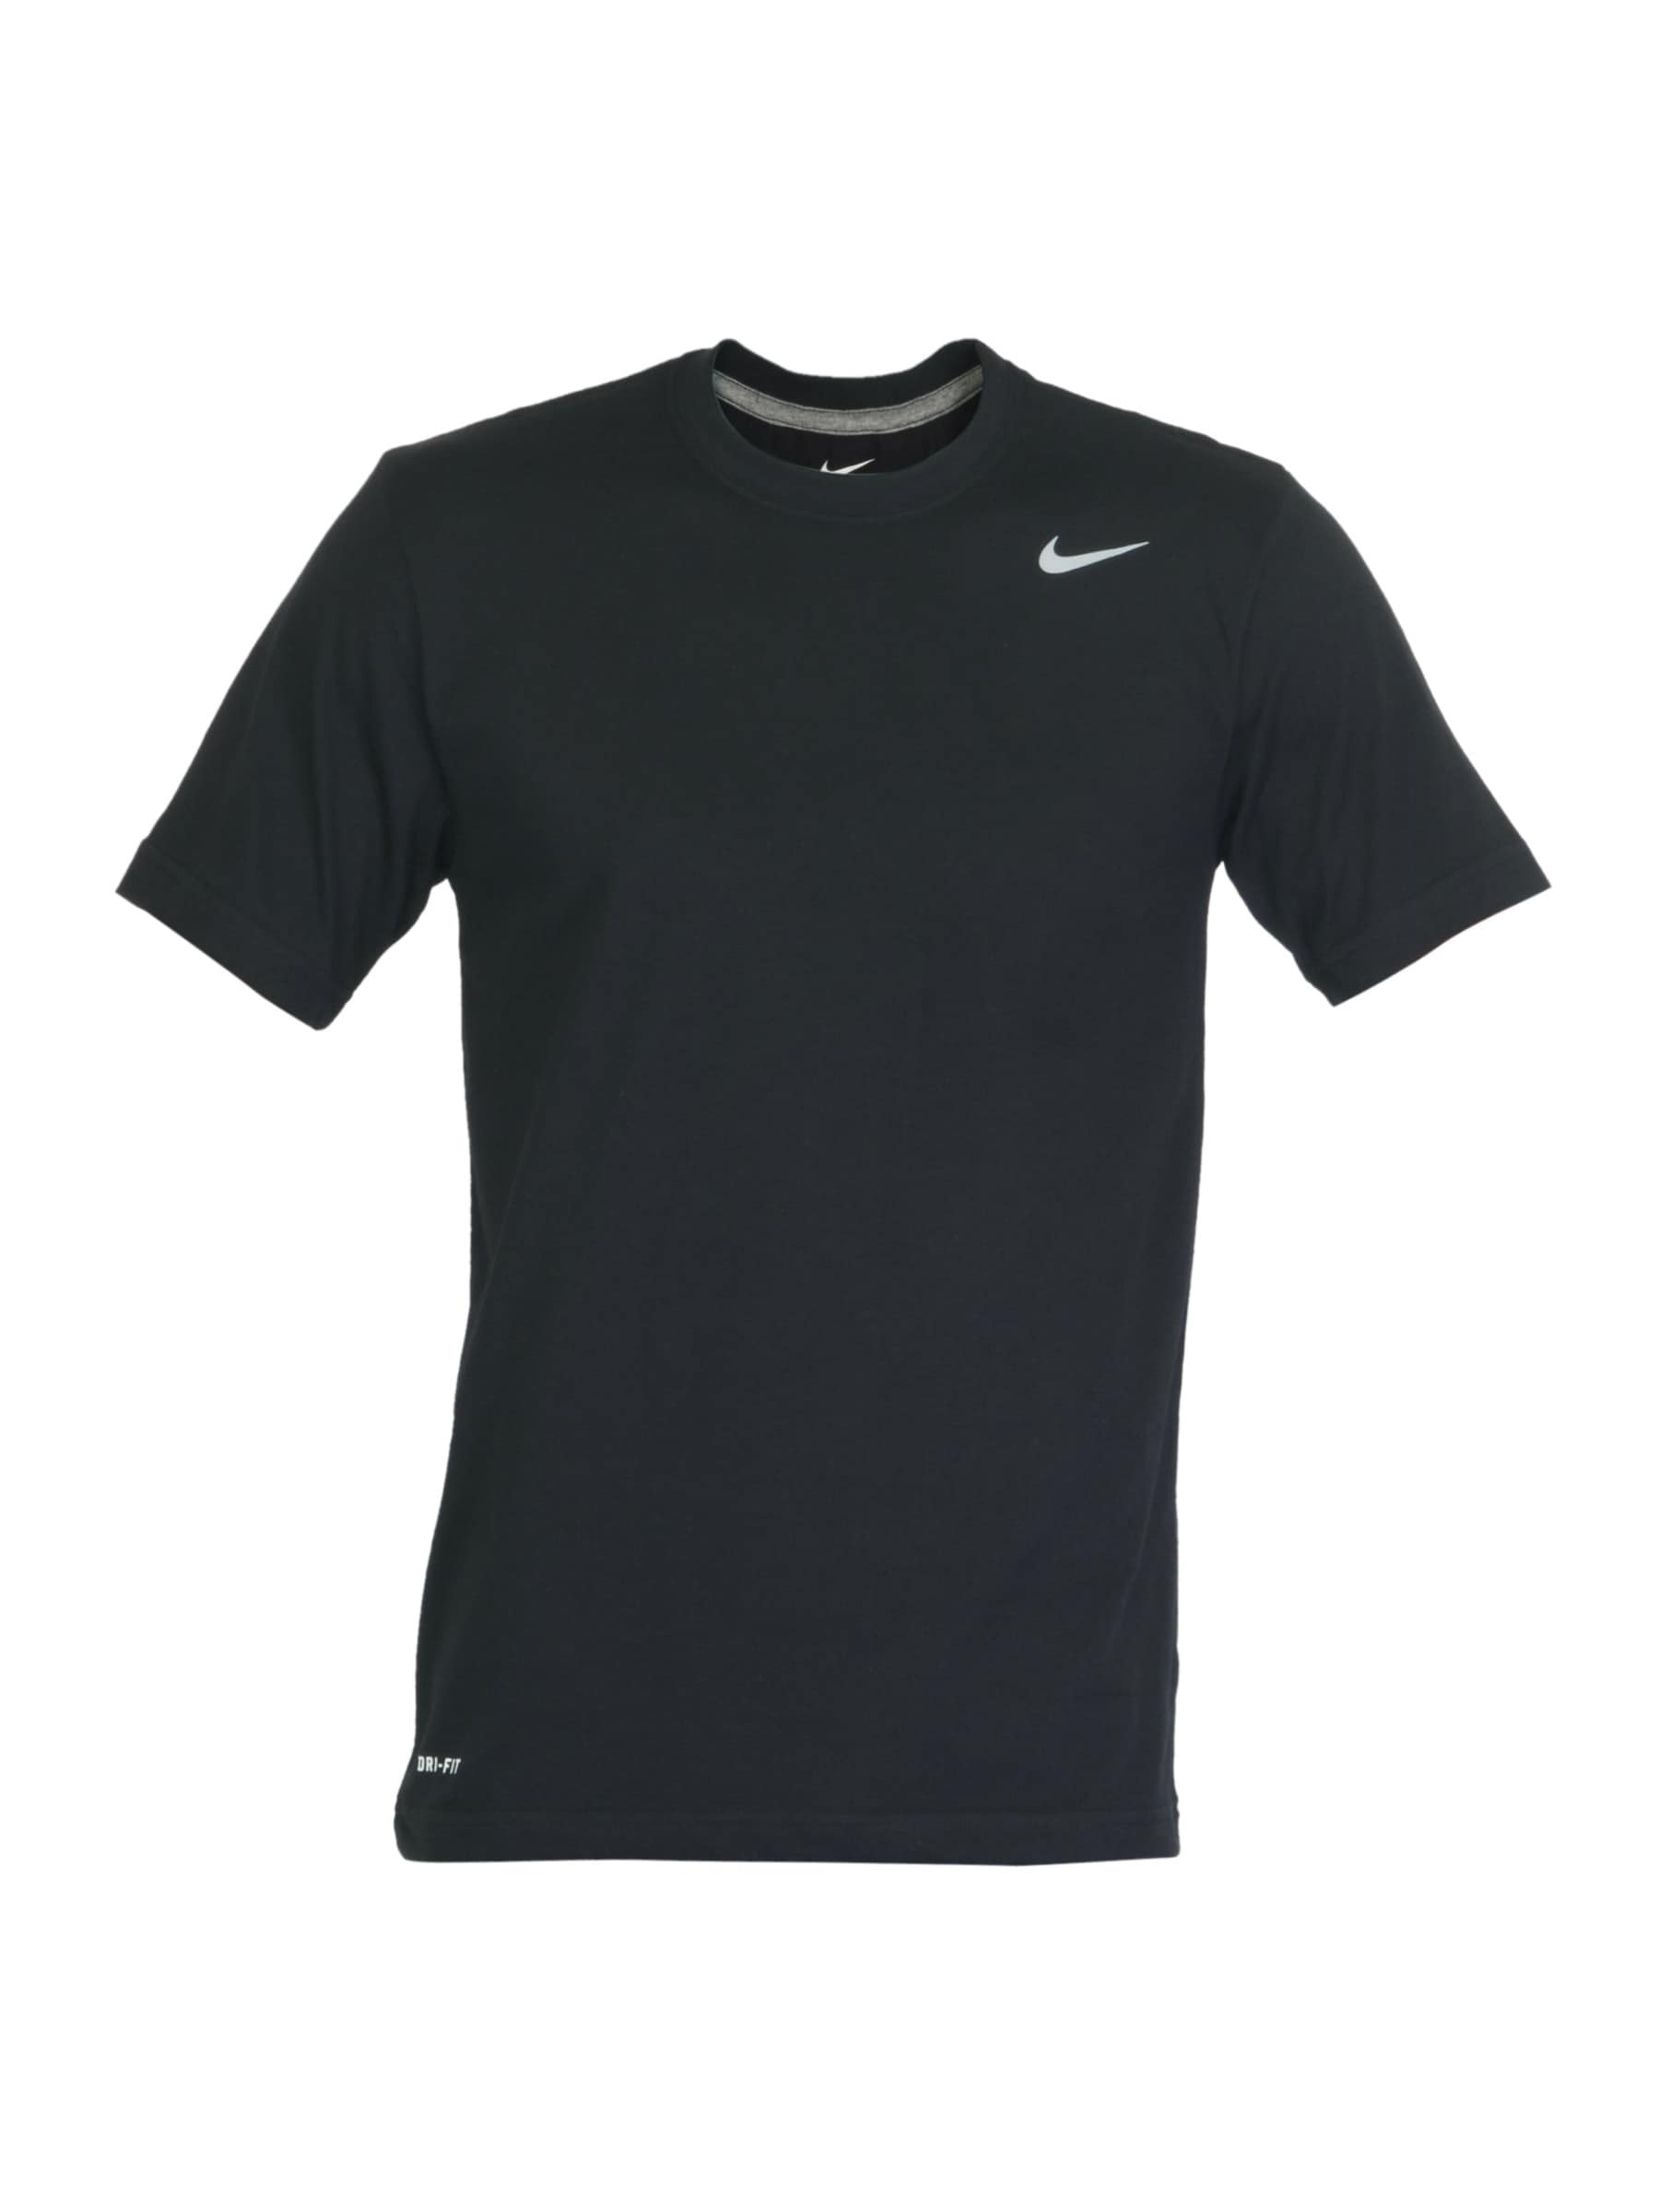 Nike Men Trainning Black T-shirt